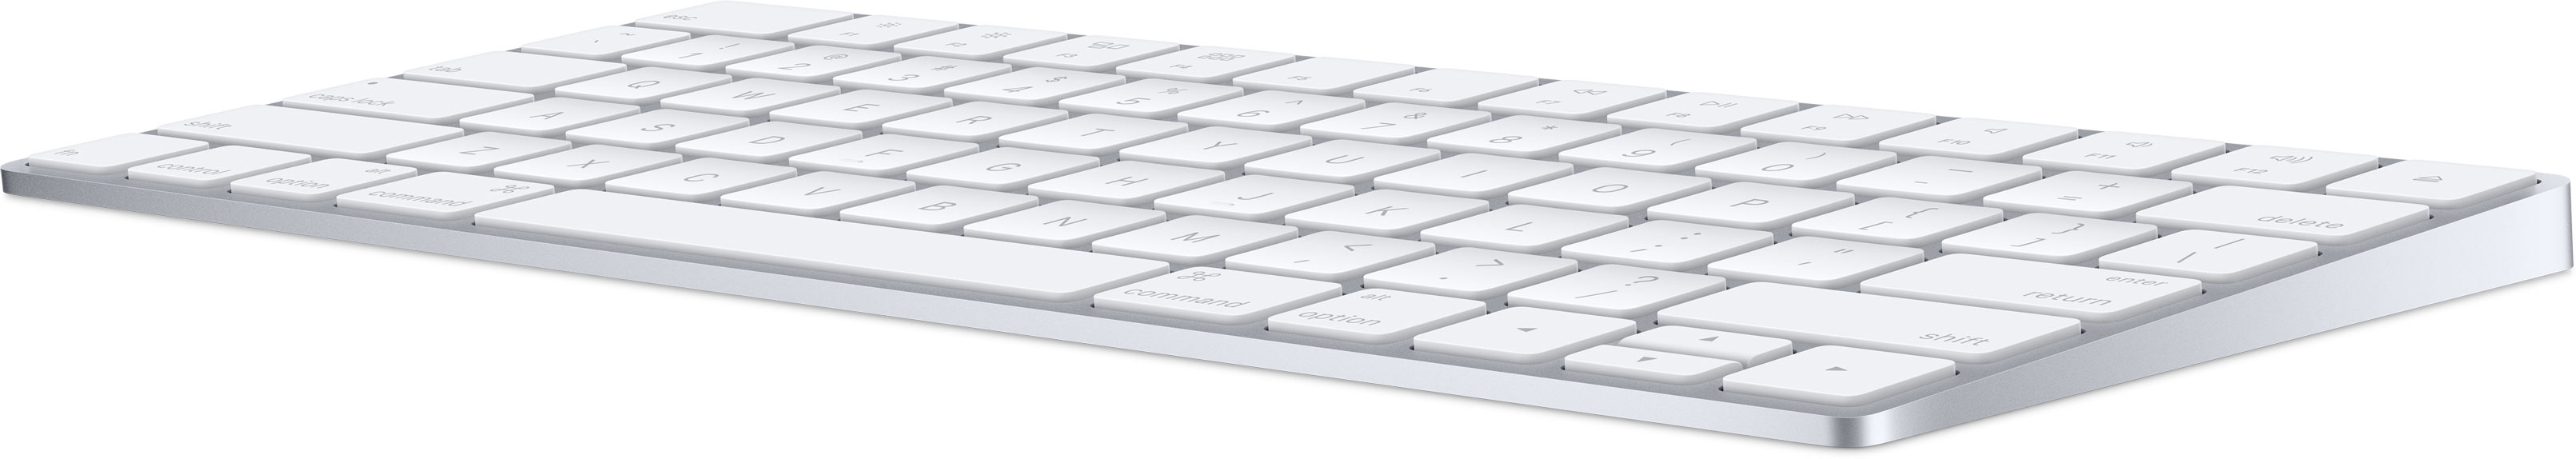 Apple Magic Keyboard.jpeg